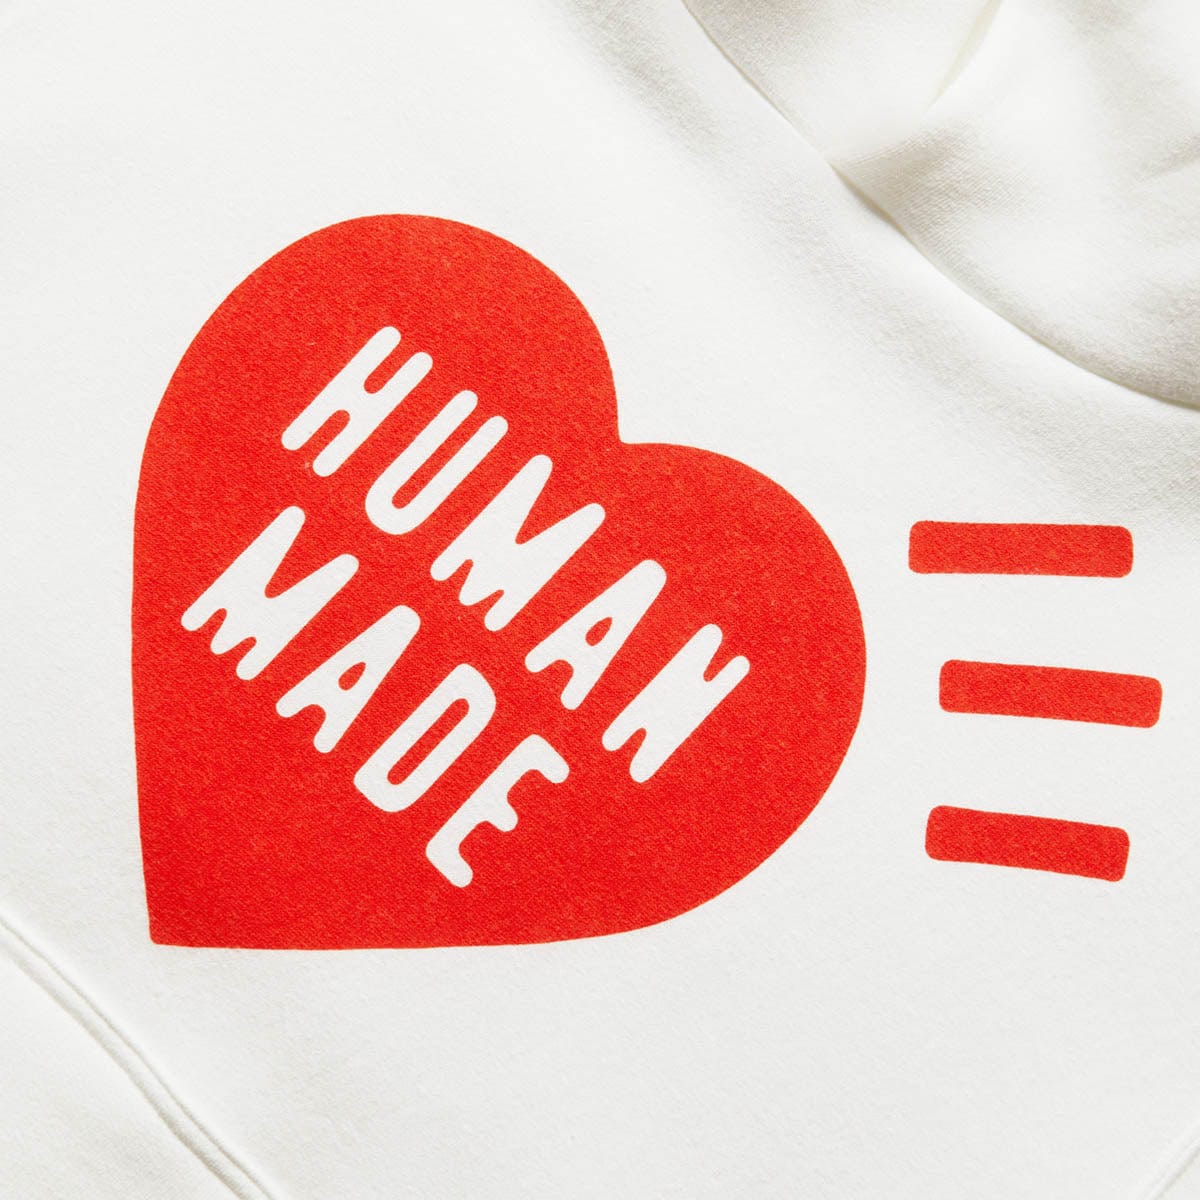 HUMAN MADE HEART | www.innoveering.net